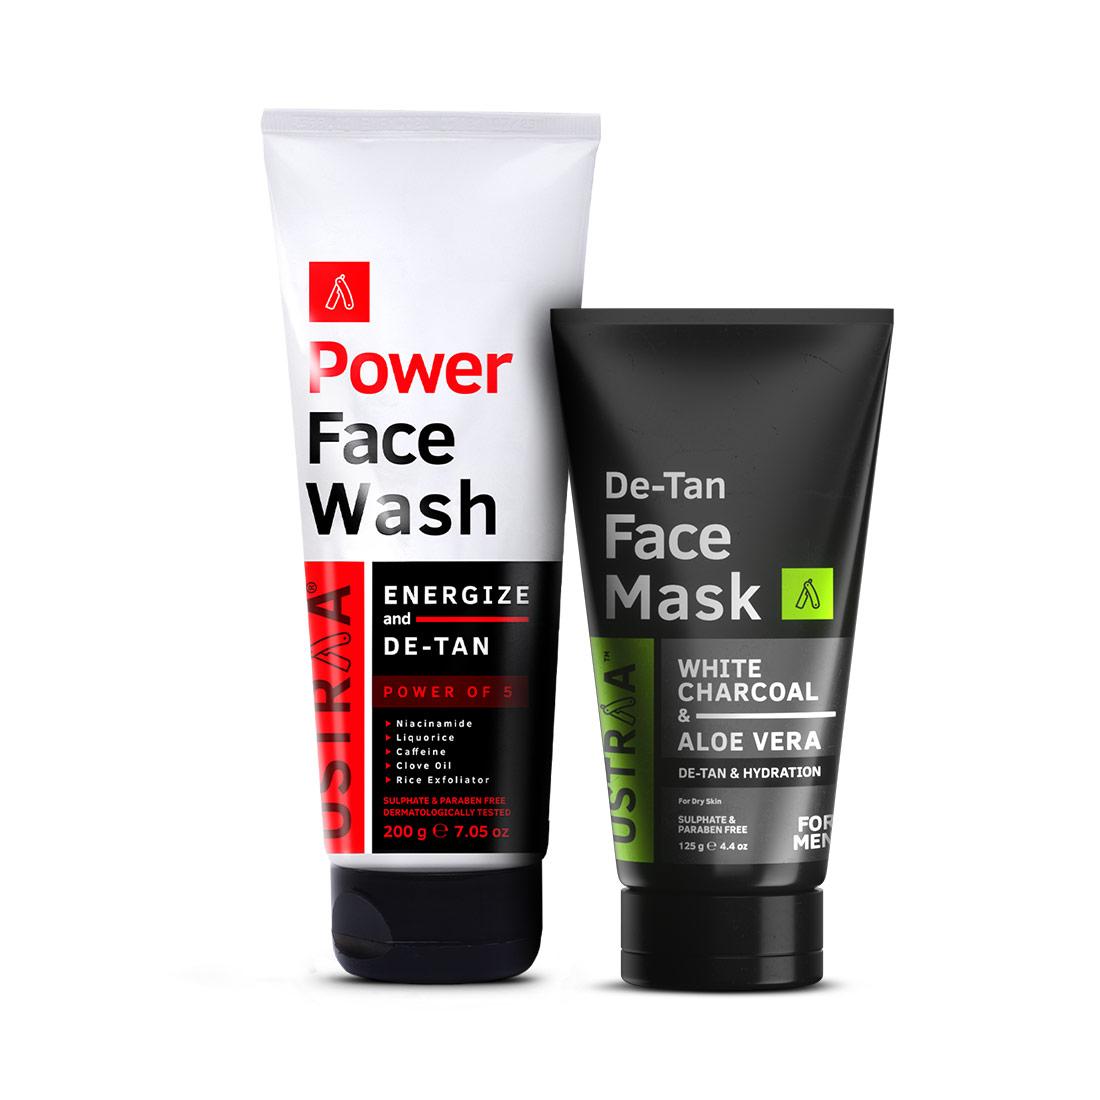 Power Face Wash Energize & De-Tan Face Mask - Dry Skin